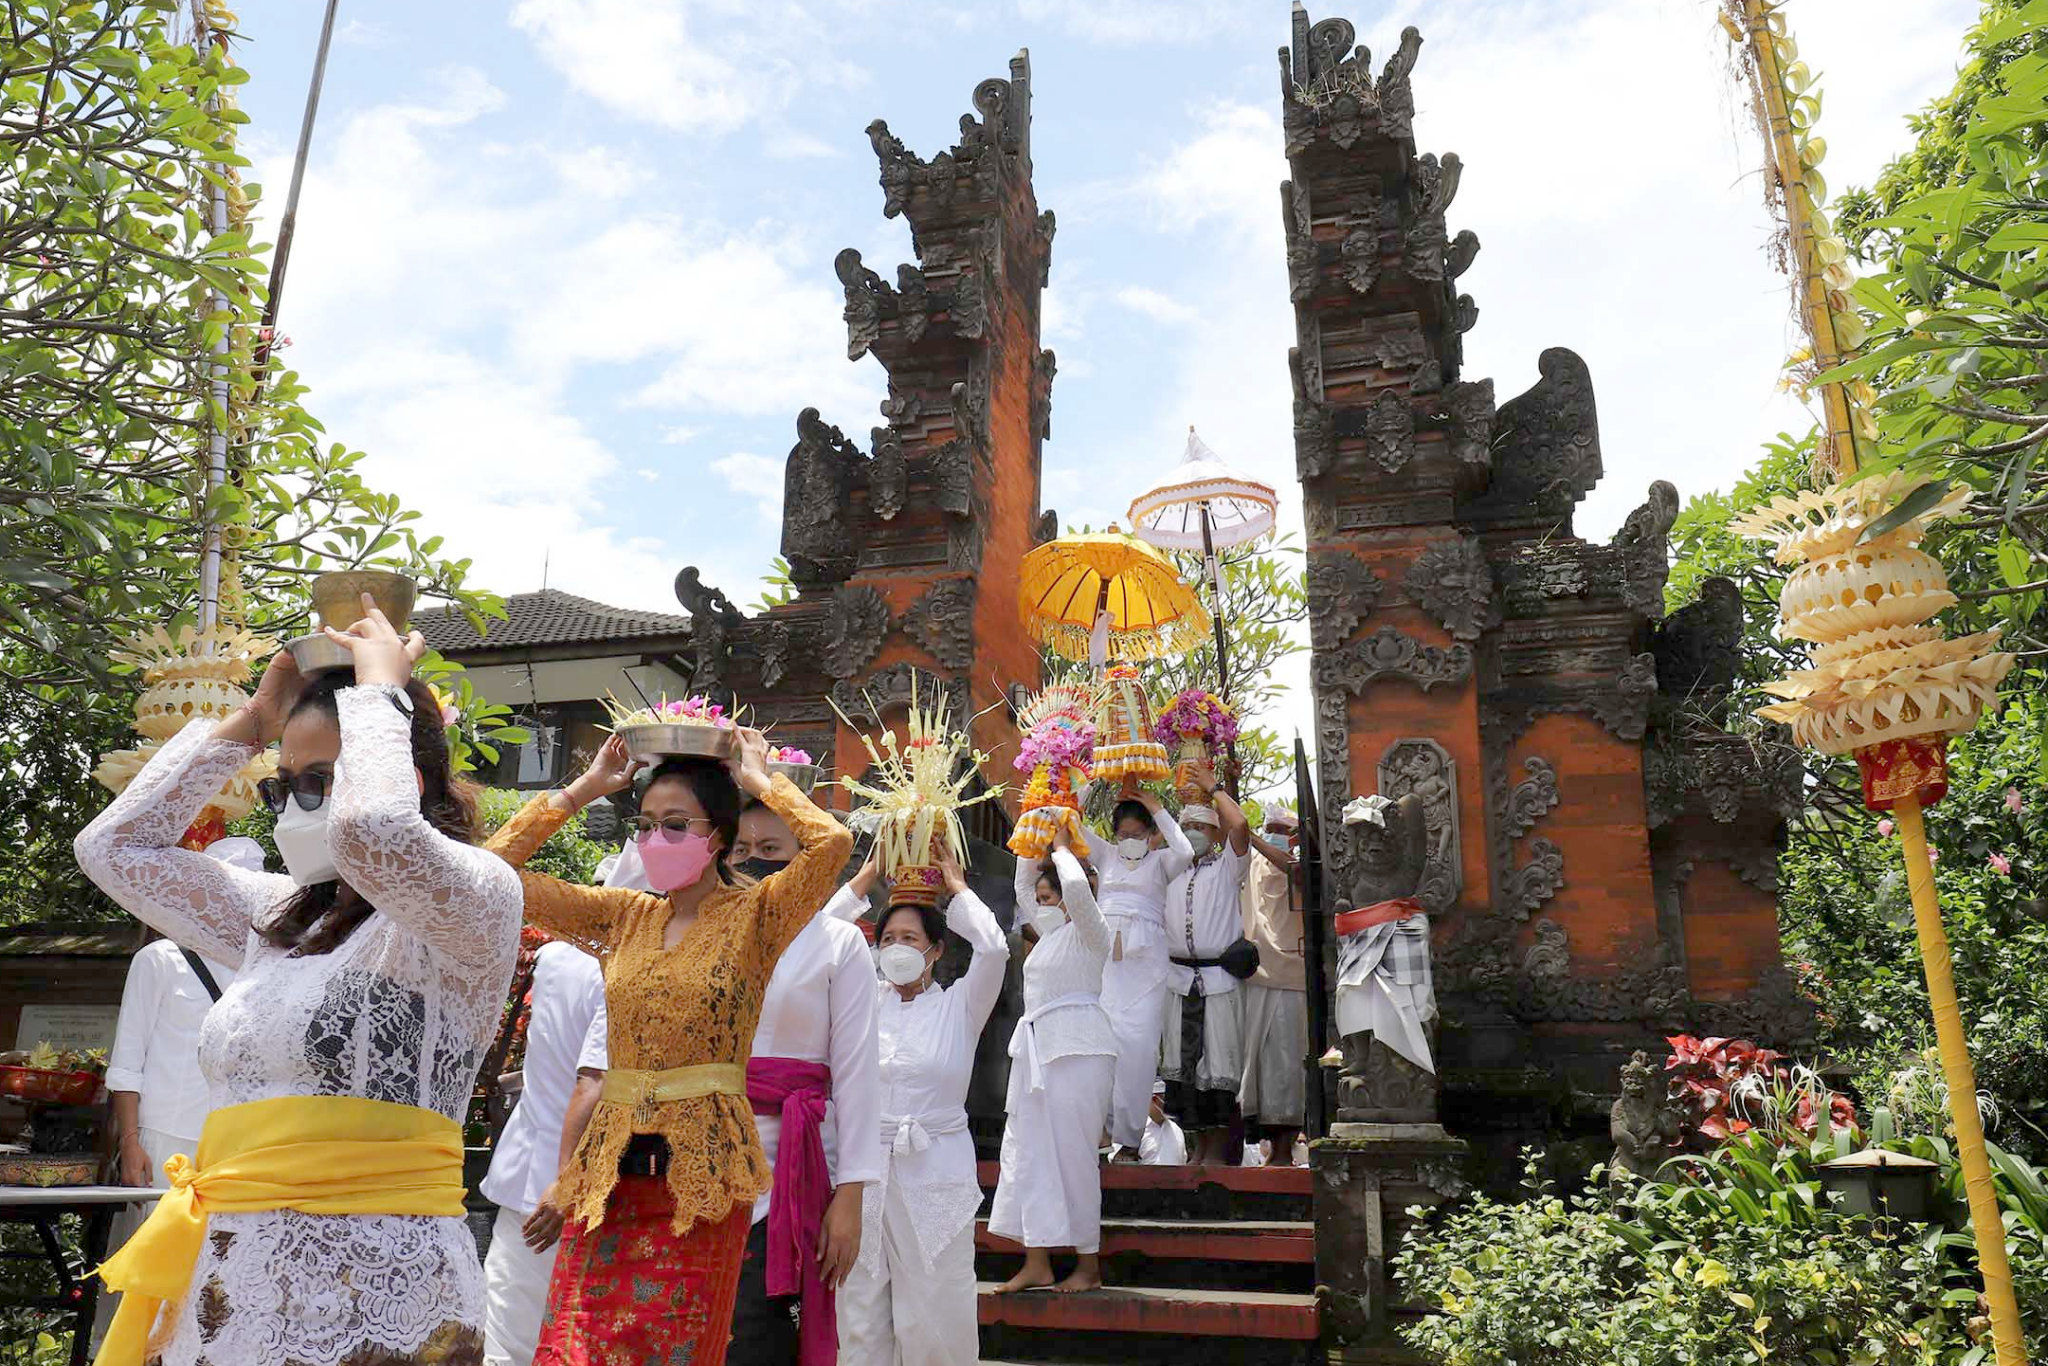 Umat Hindu mengikuti prosesi ritual Tawur Agung Kesanga menyambut Hari Raya Nyepi Tahun Baru Caka 1944 di Pura Amerta Jati, Cinere, Depok, Jawa Barat, Rabu, 2 Maret 2022. Foto: Ismail Pohan/TrenAsia